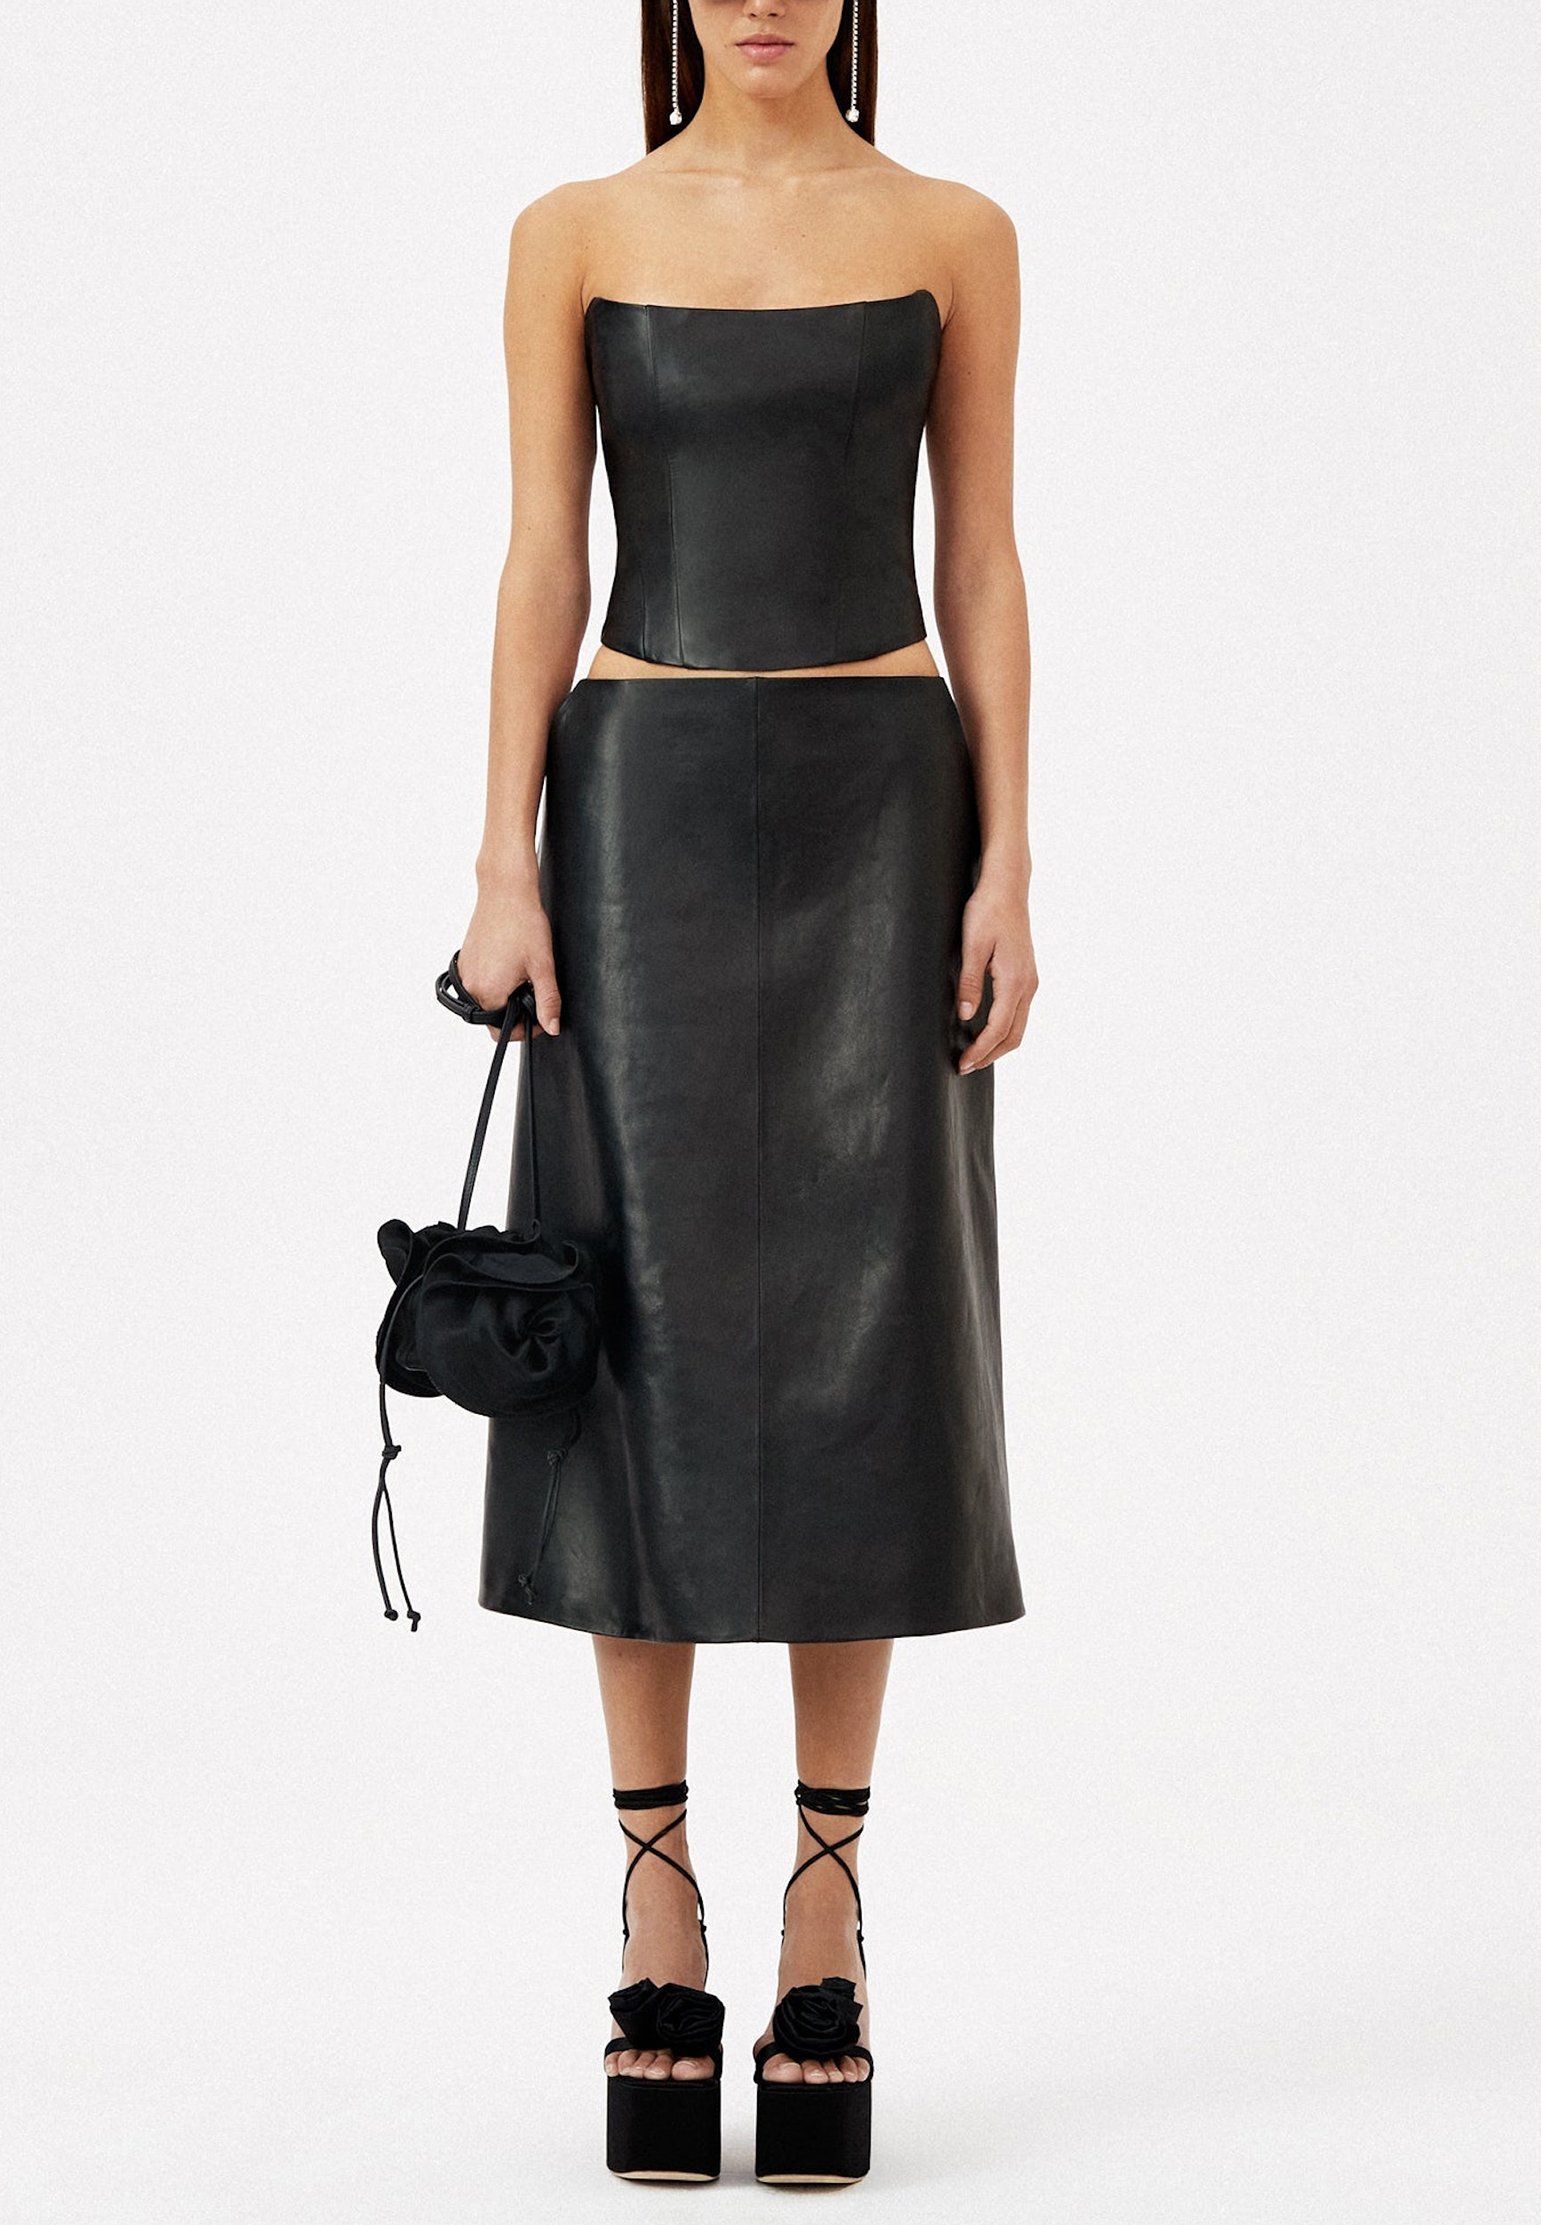 Skirt MAGDA BUTRYM Color: black (Code: 2292) in online store Allure